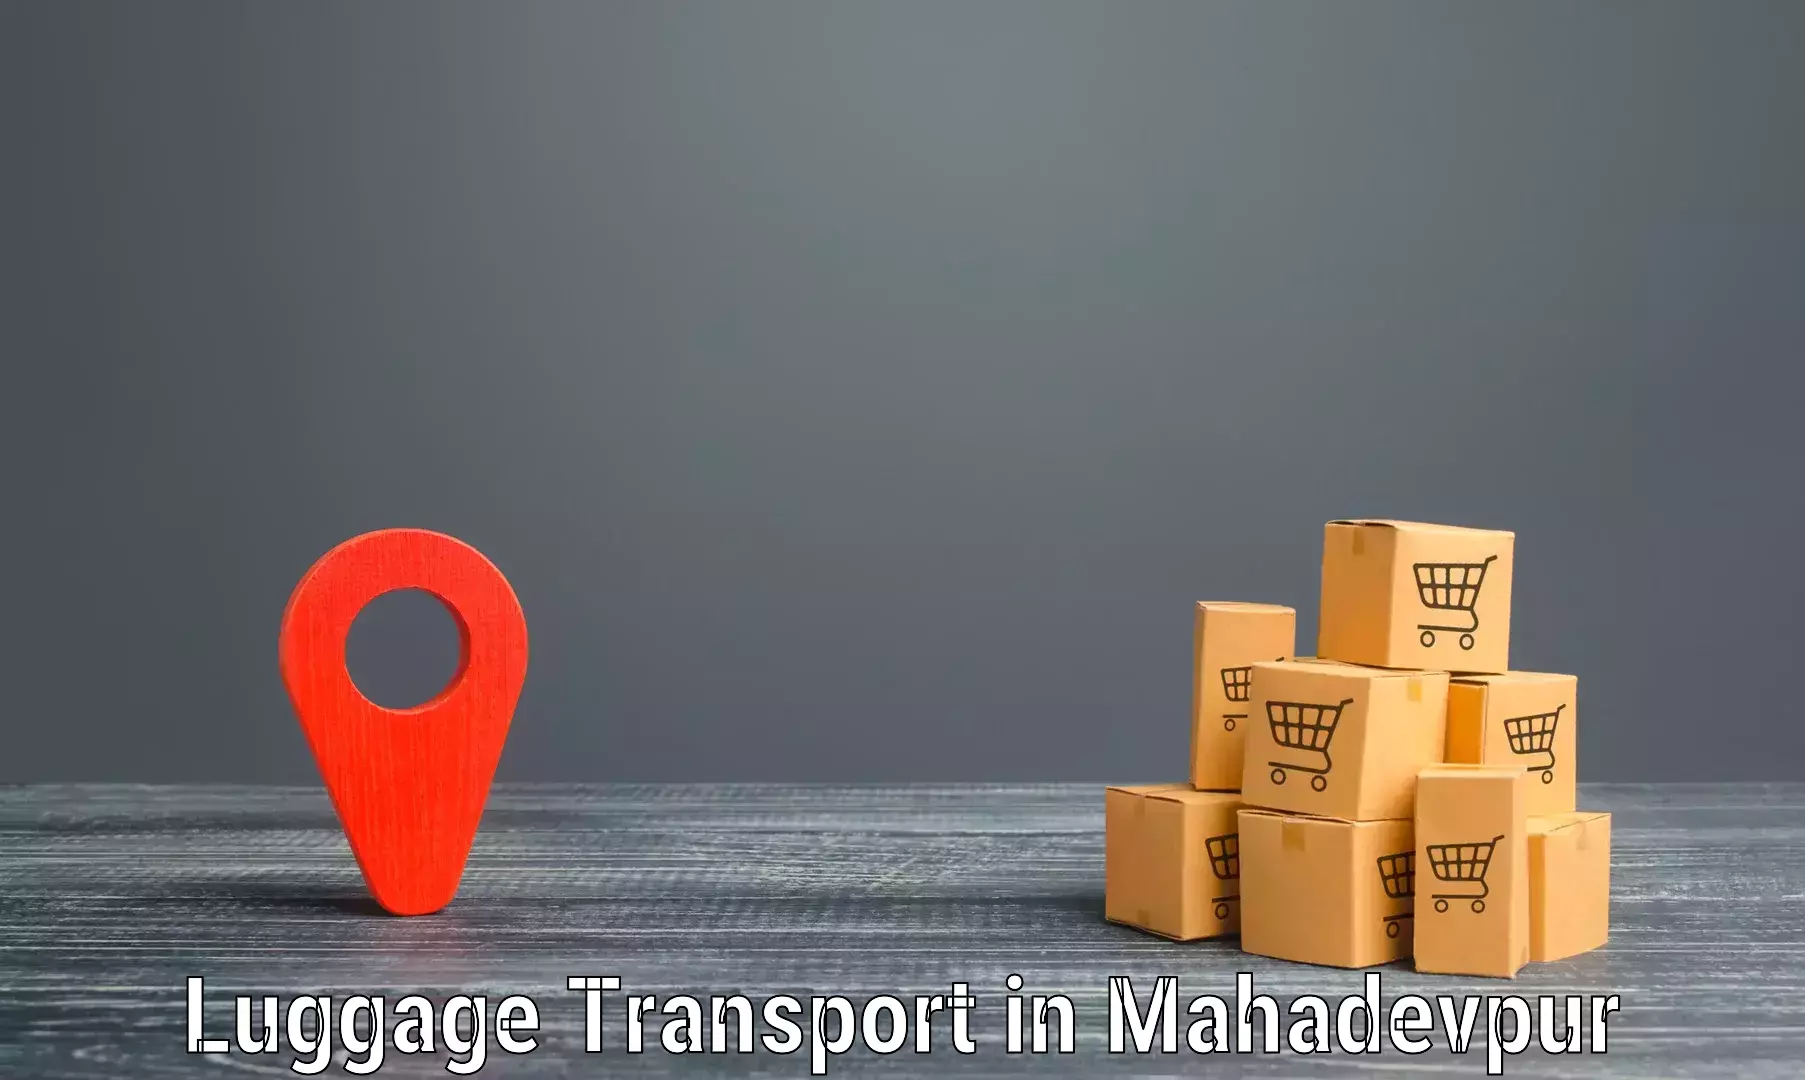 Doorstep luggage collection in Mahadevpur